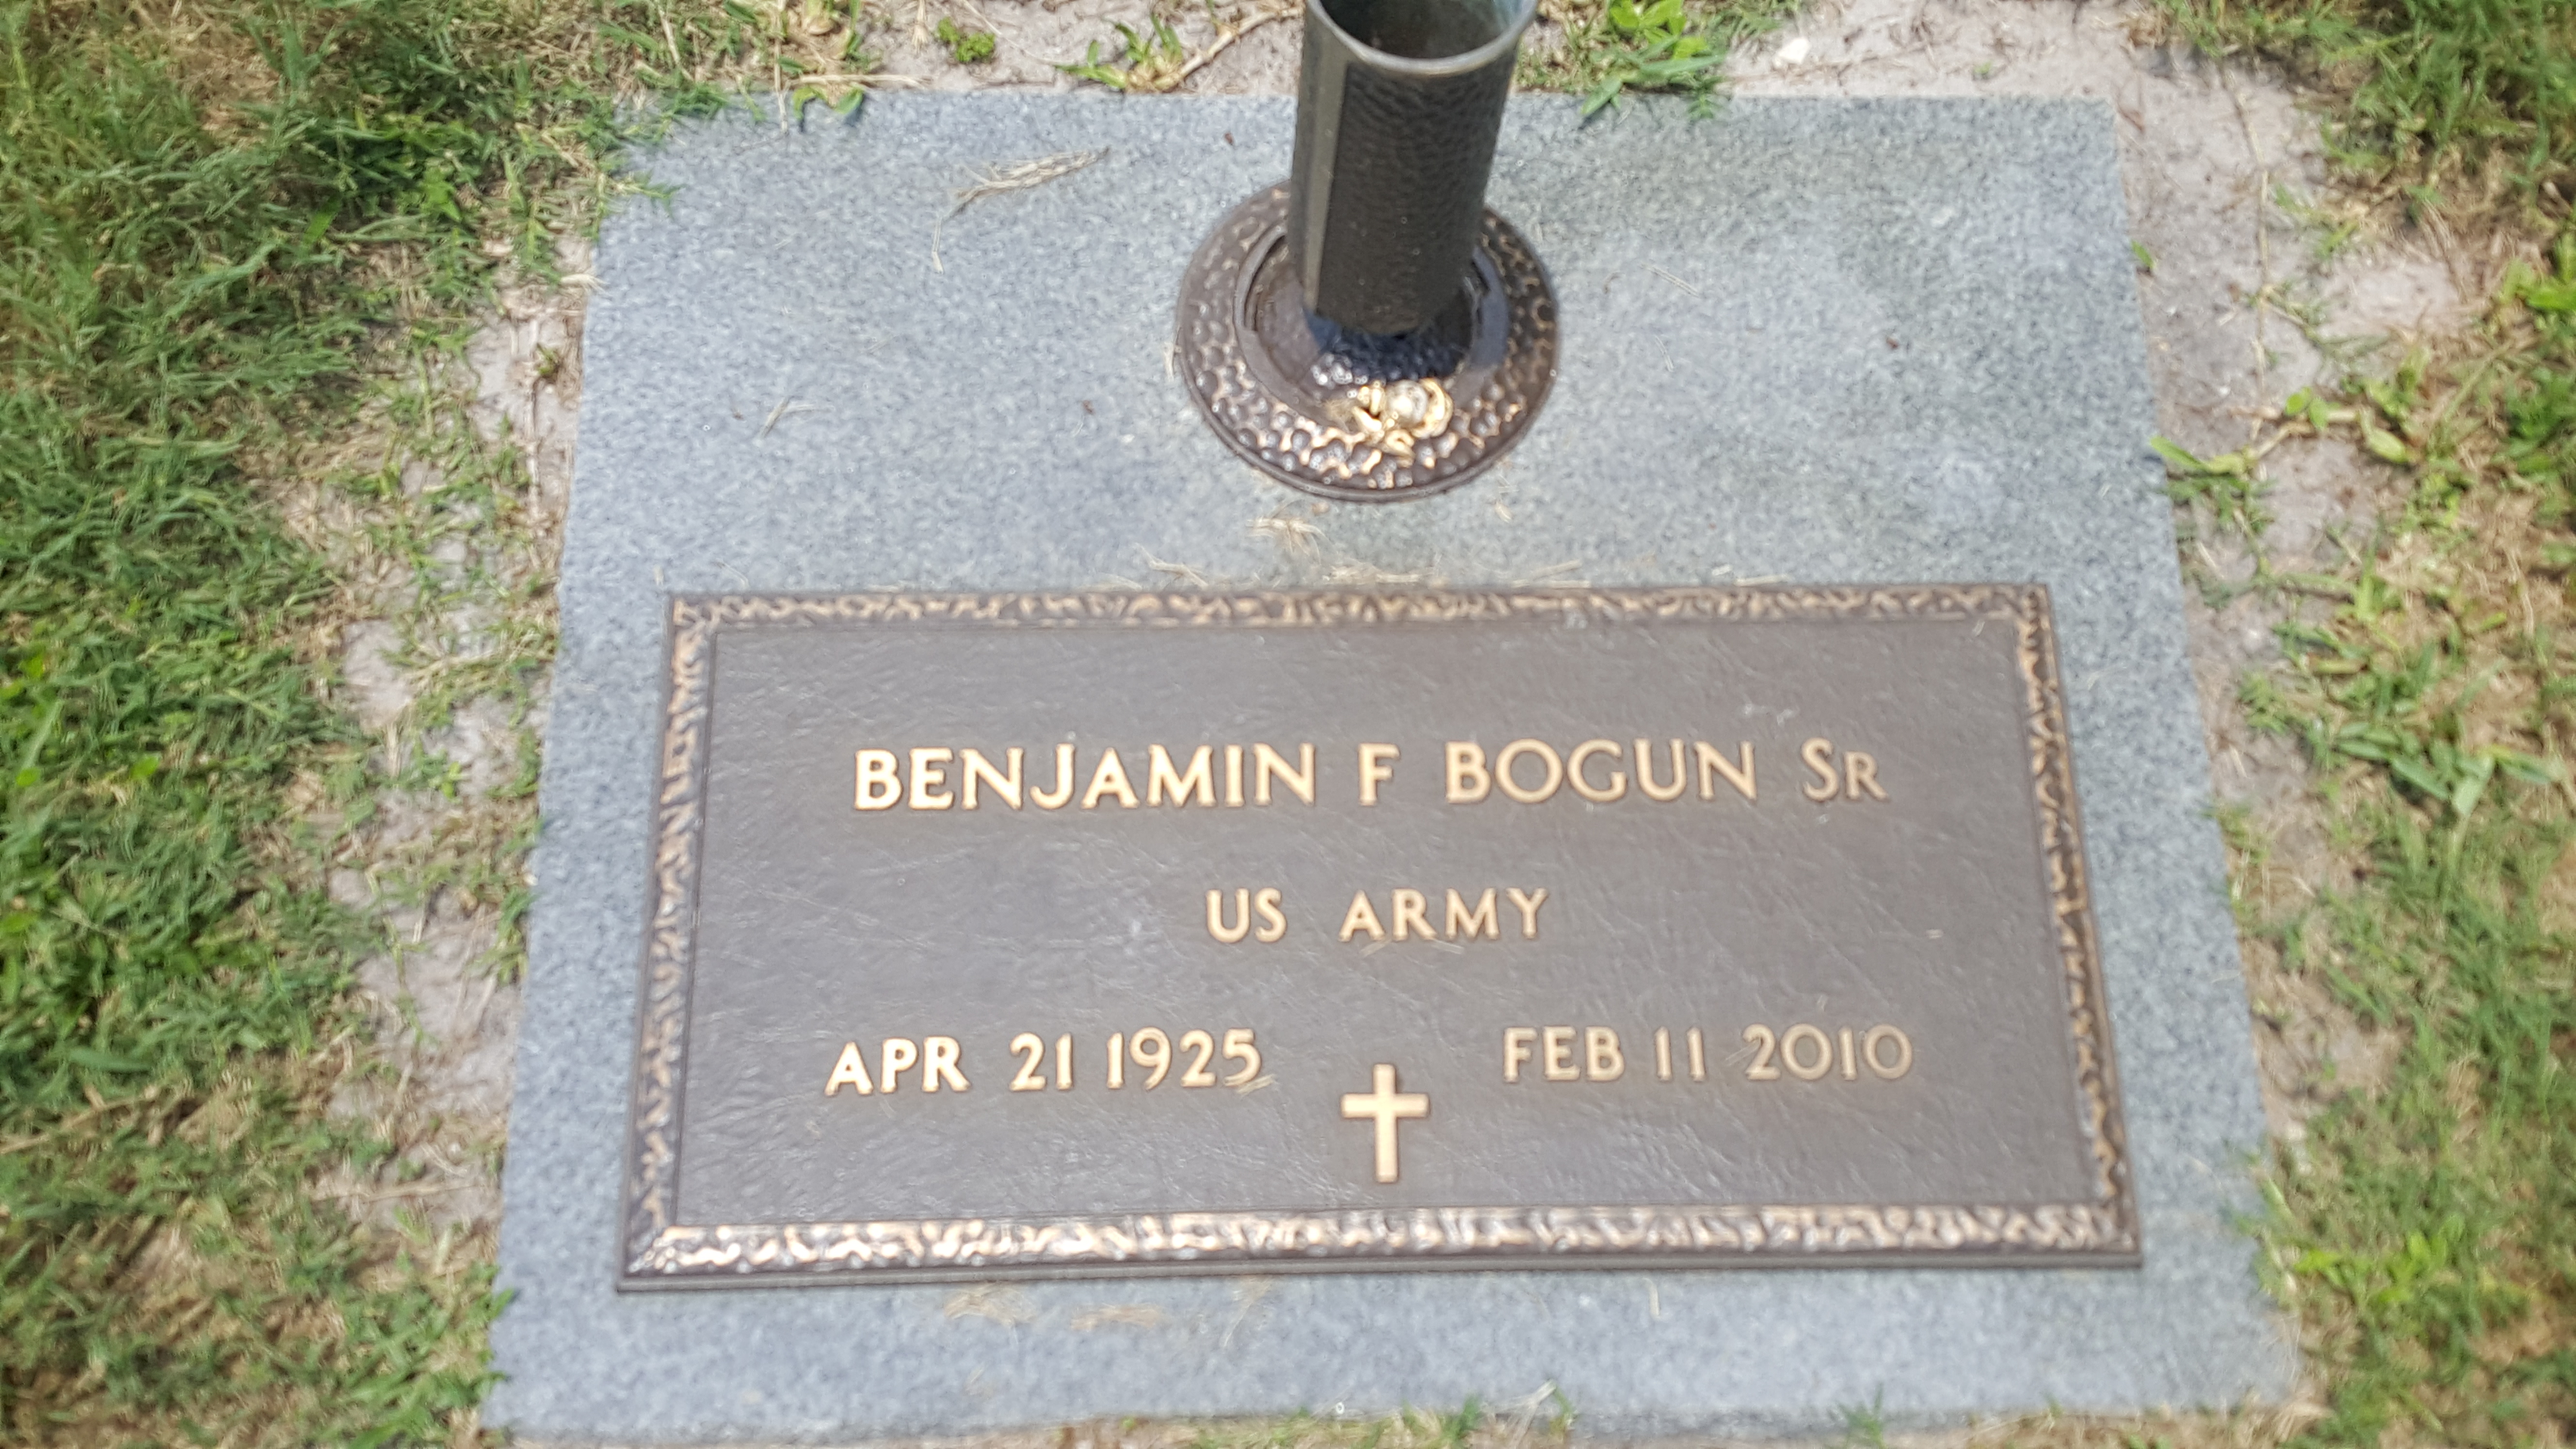 Benjamin F Bogun, Sr